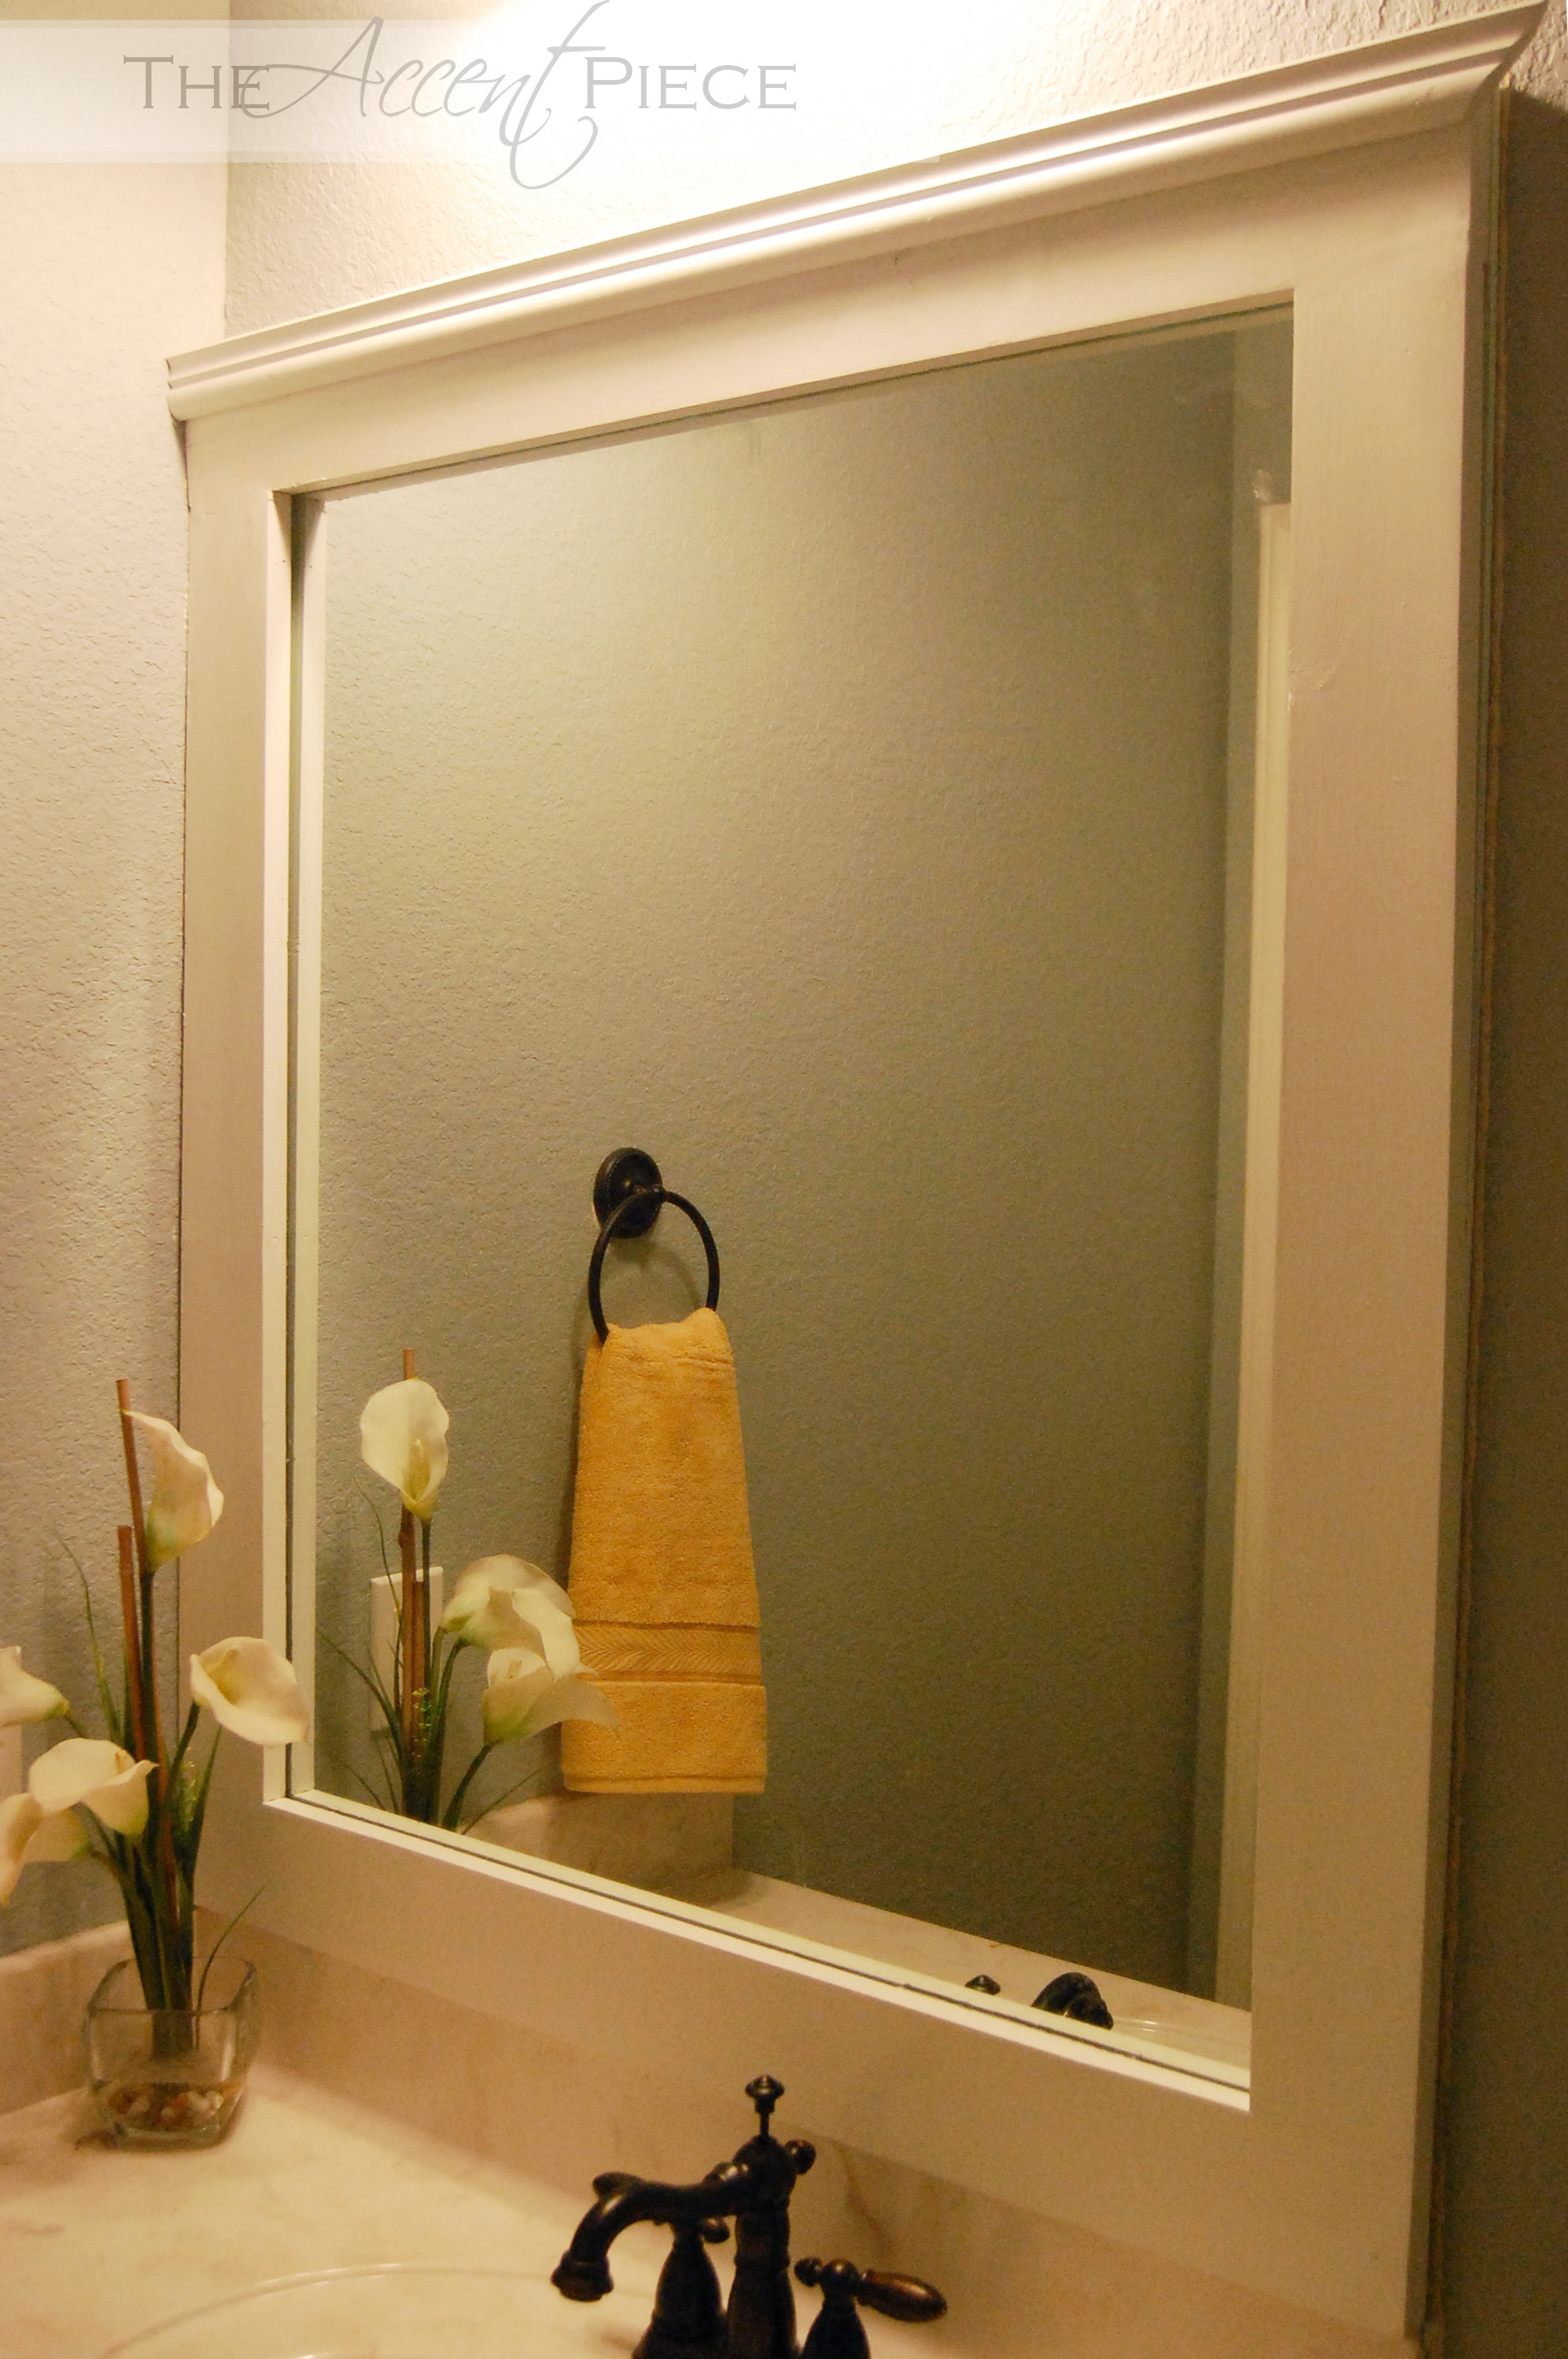 Best ideas about DIY Frame Bathroom Mirror
. Save or Pin DIY Framed Bathroom Mirror Now.